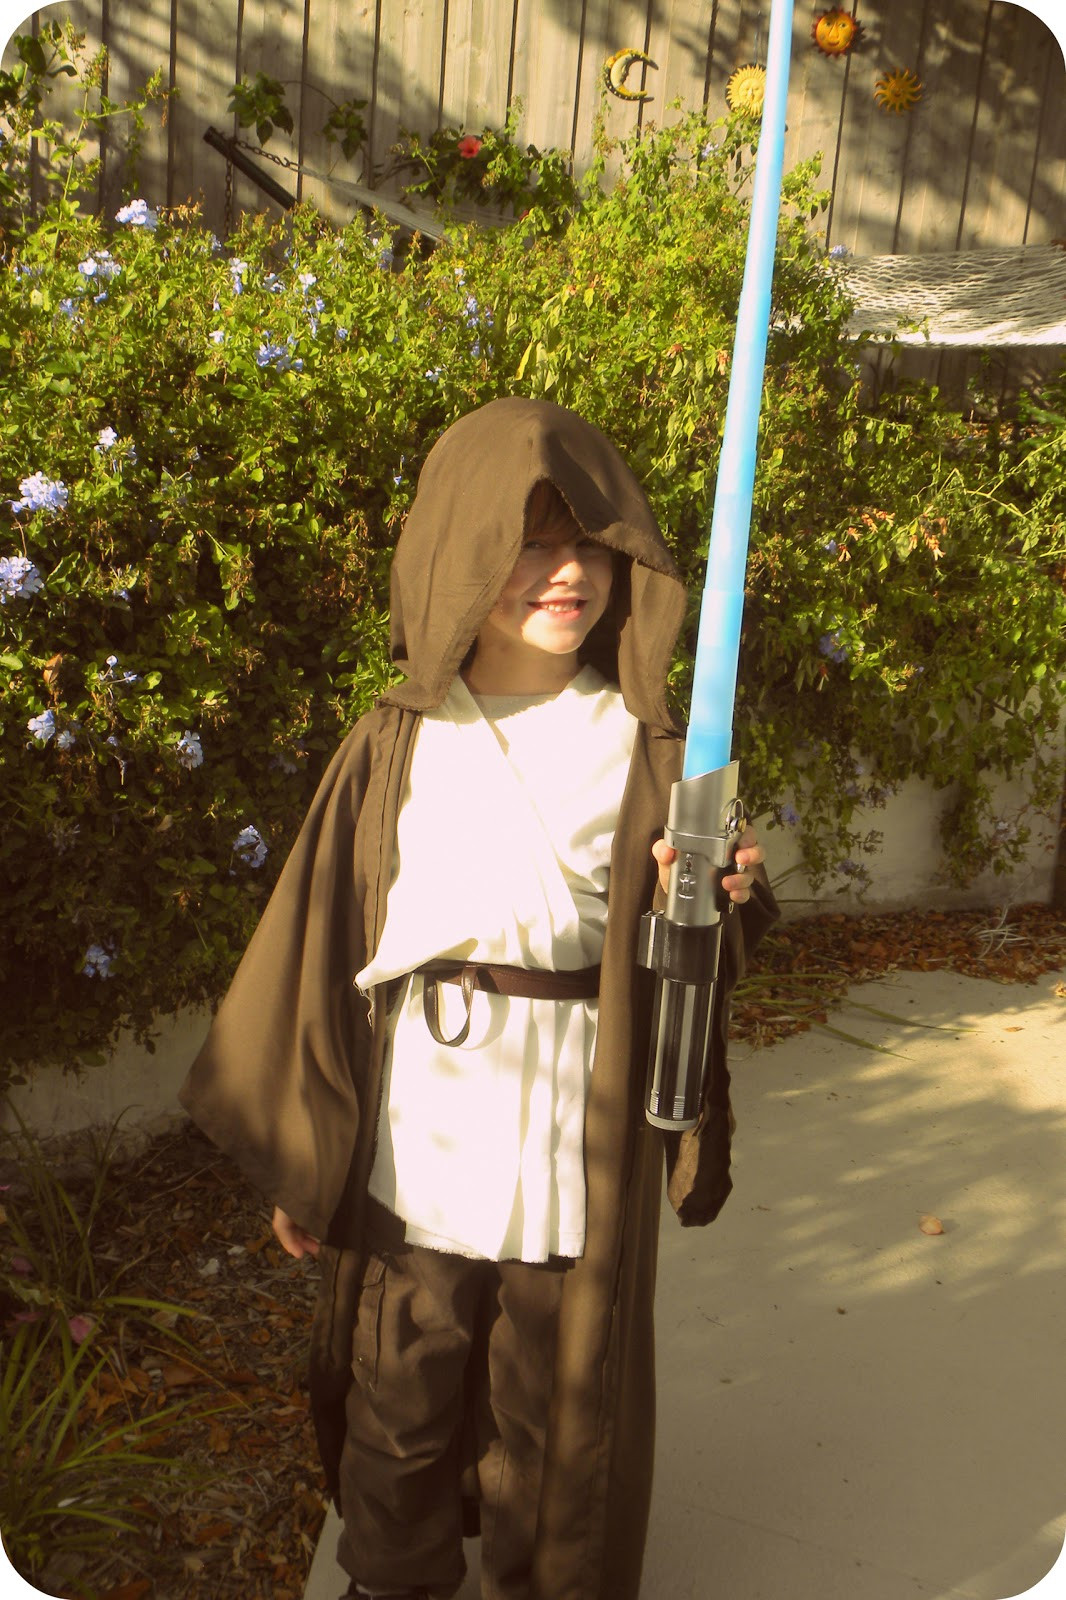 Best ideas about Jedi Costume DIY
. Save or Pin The Homemade Jedi Costume A Jedi Seamstress Am I Now.